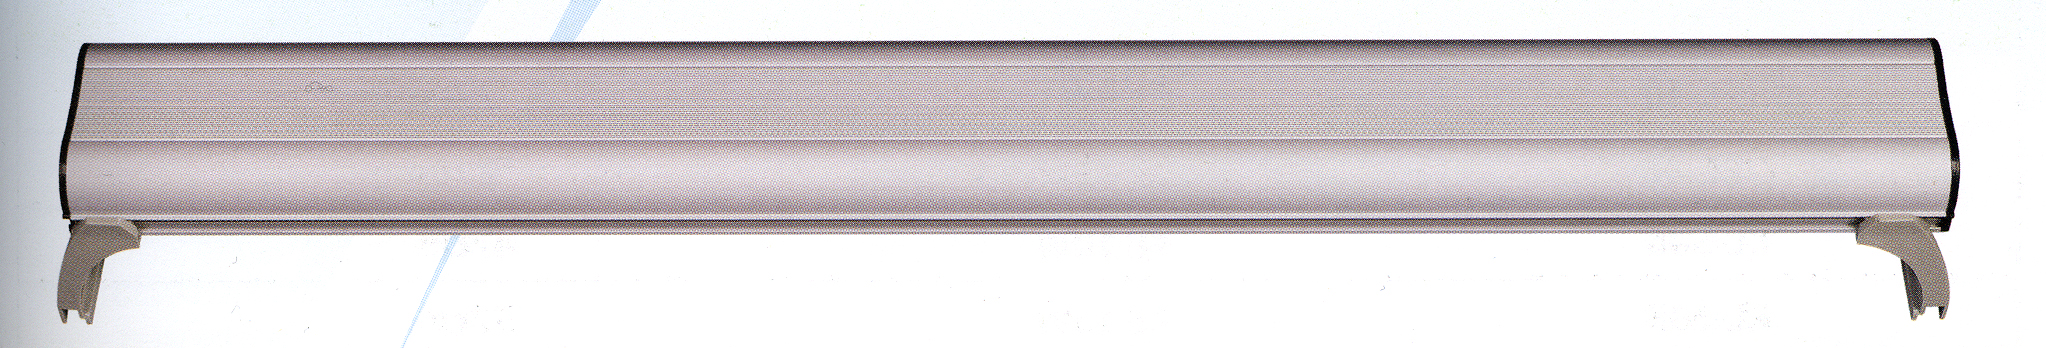 XILONG светильник T8 2х15Вт XL-70A, 67см